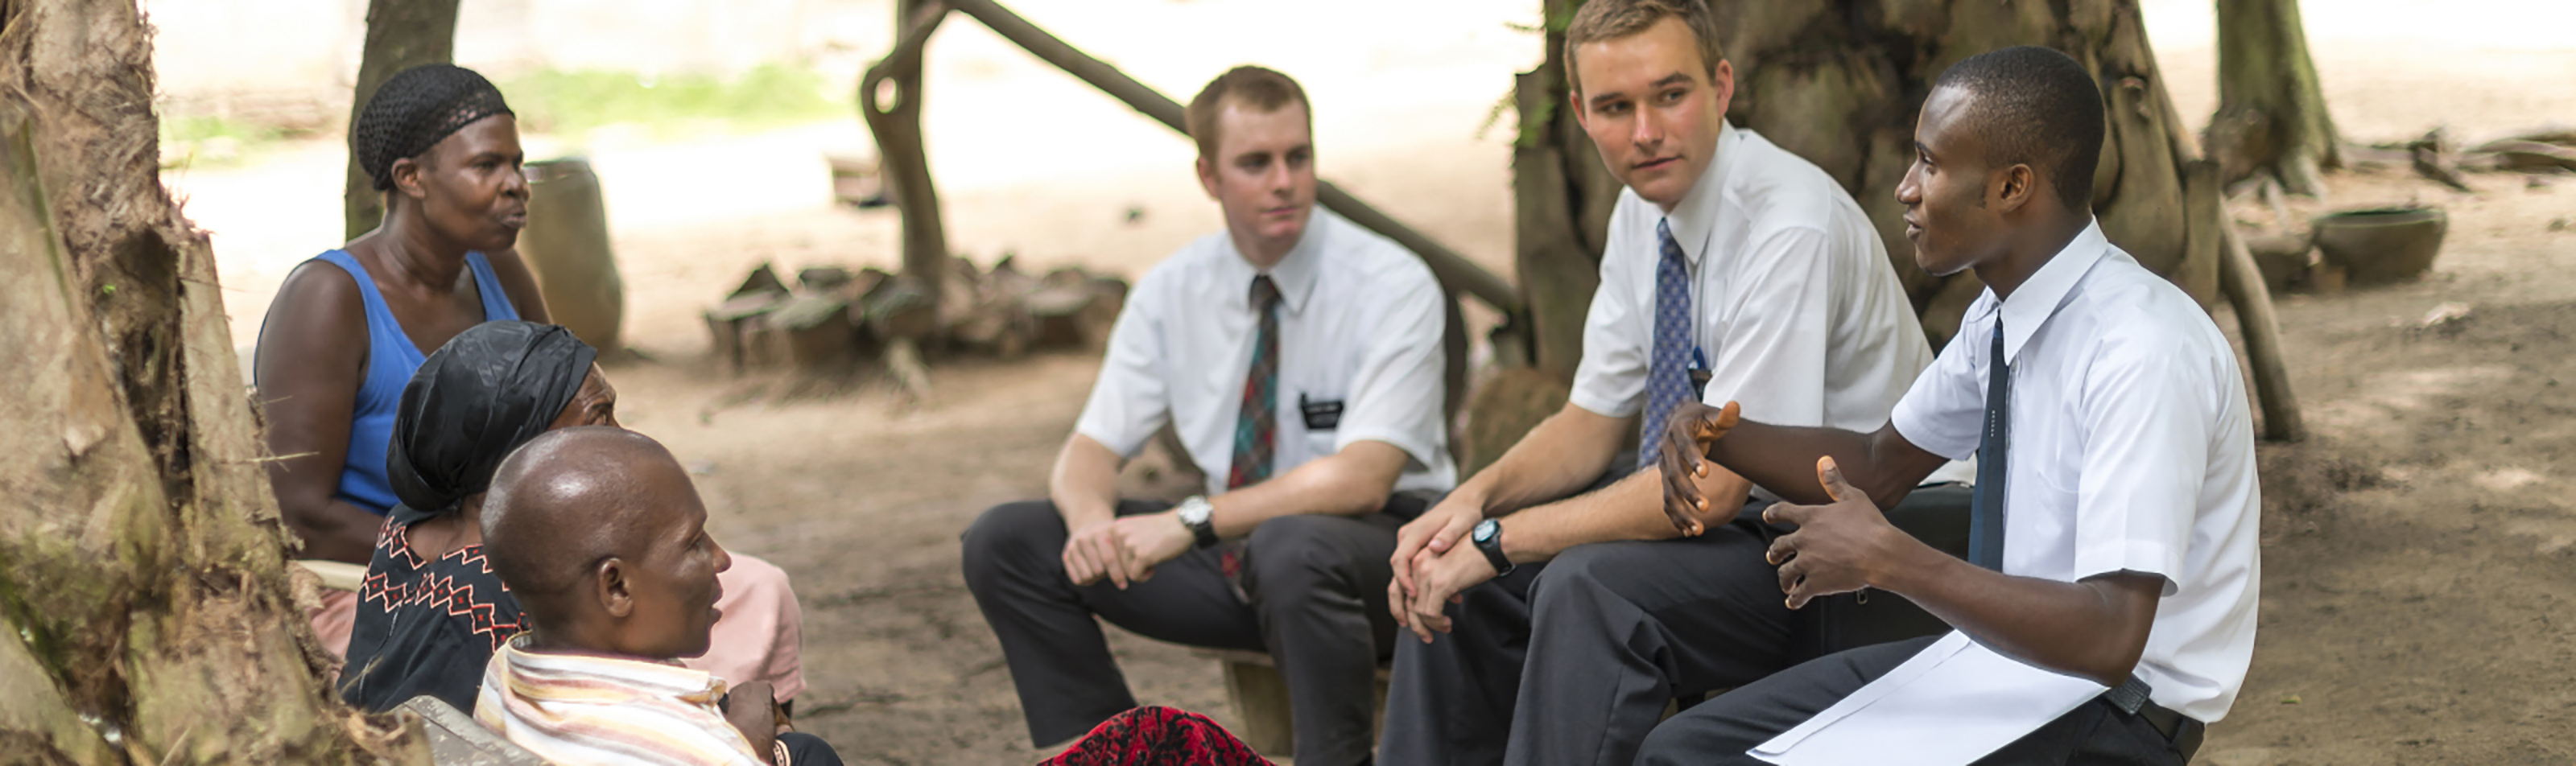 mormon-missionaries-teaching-ghana.jpg